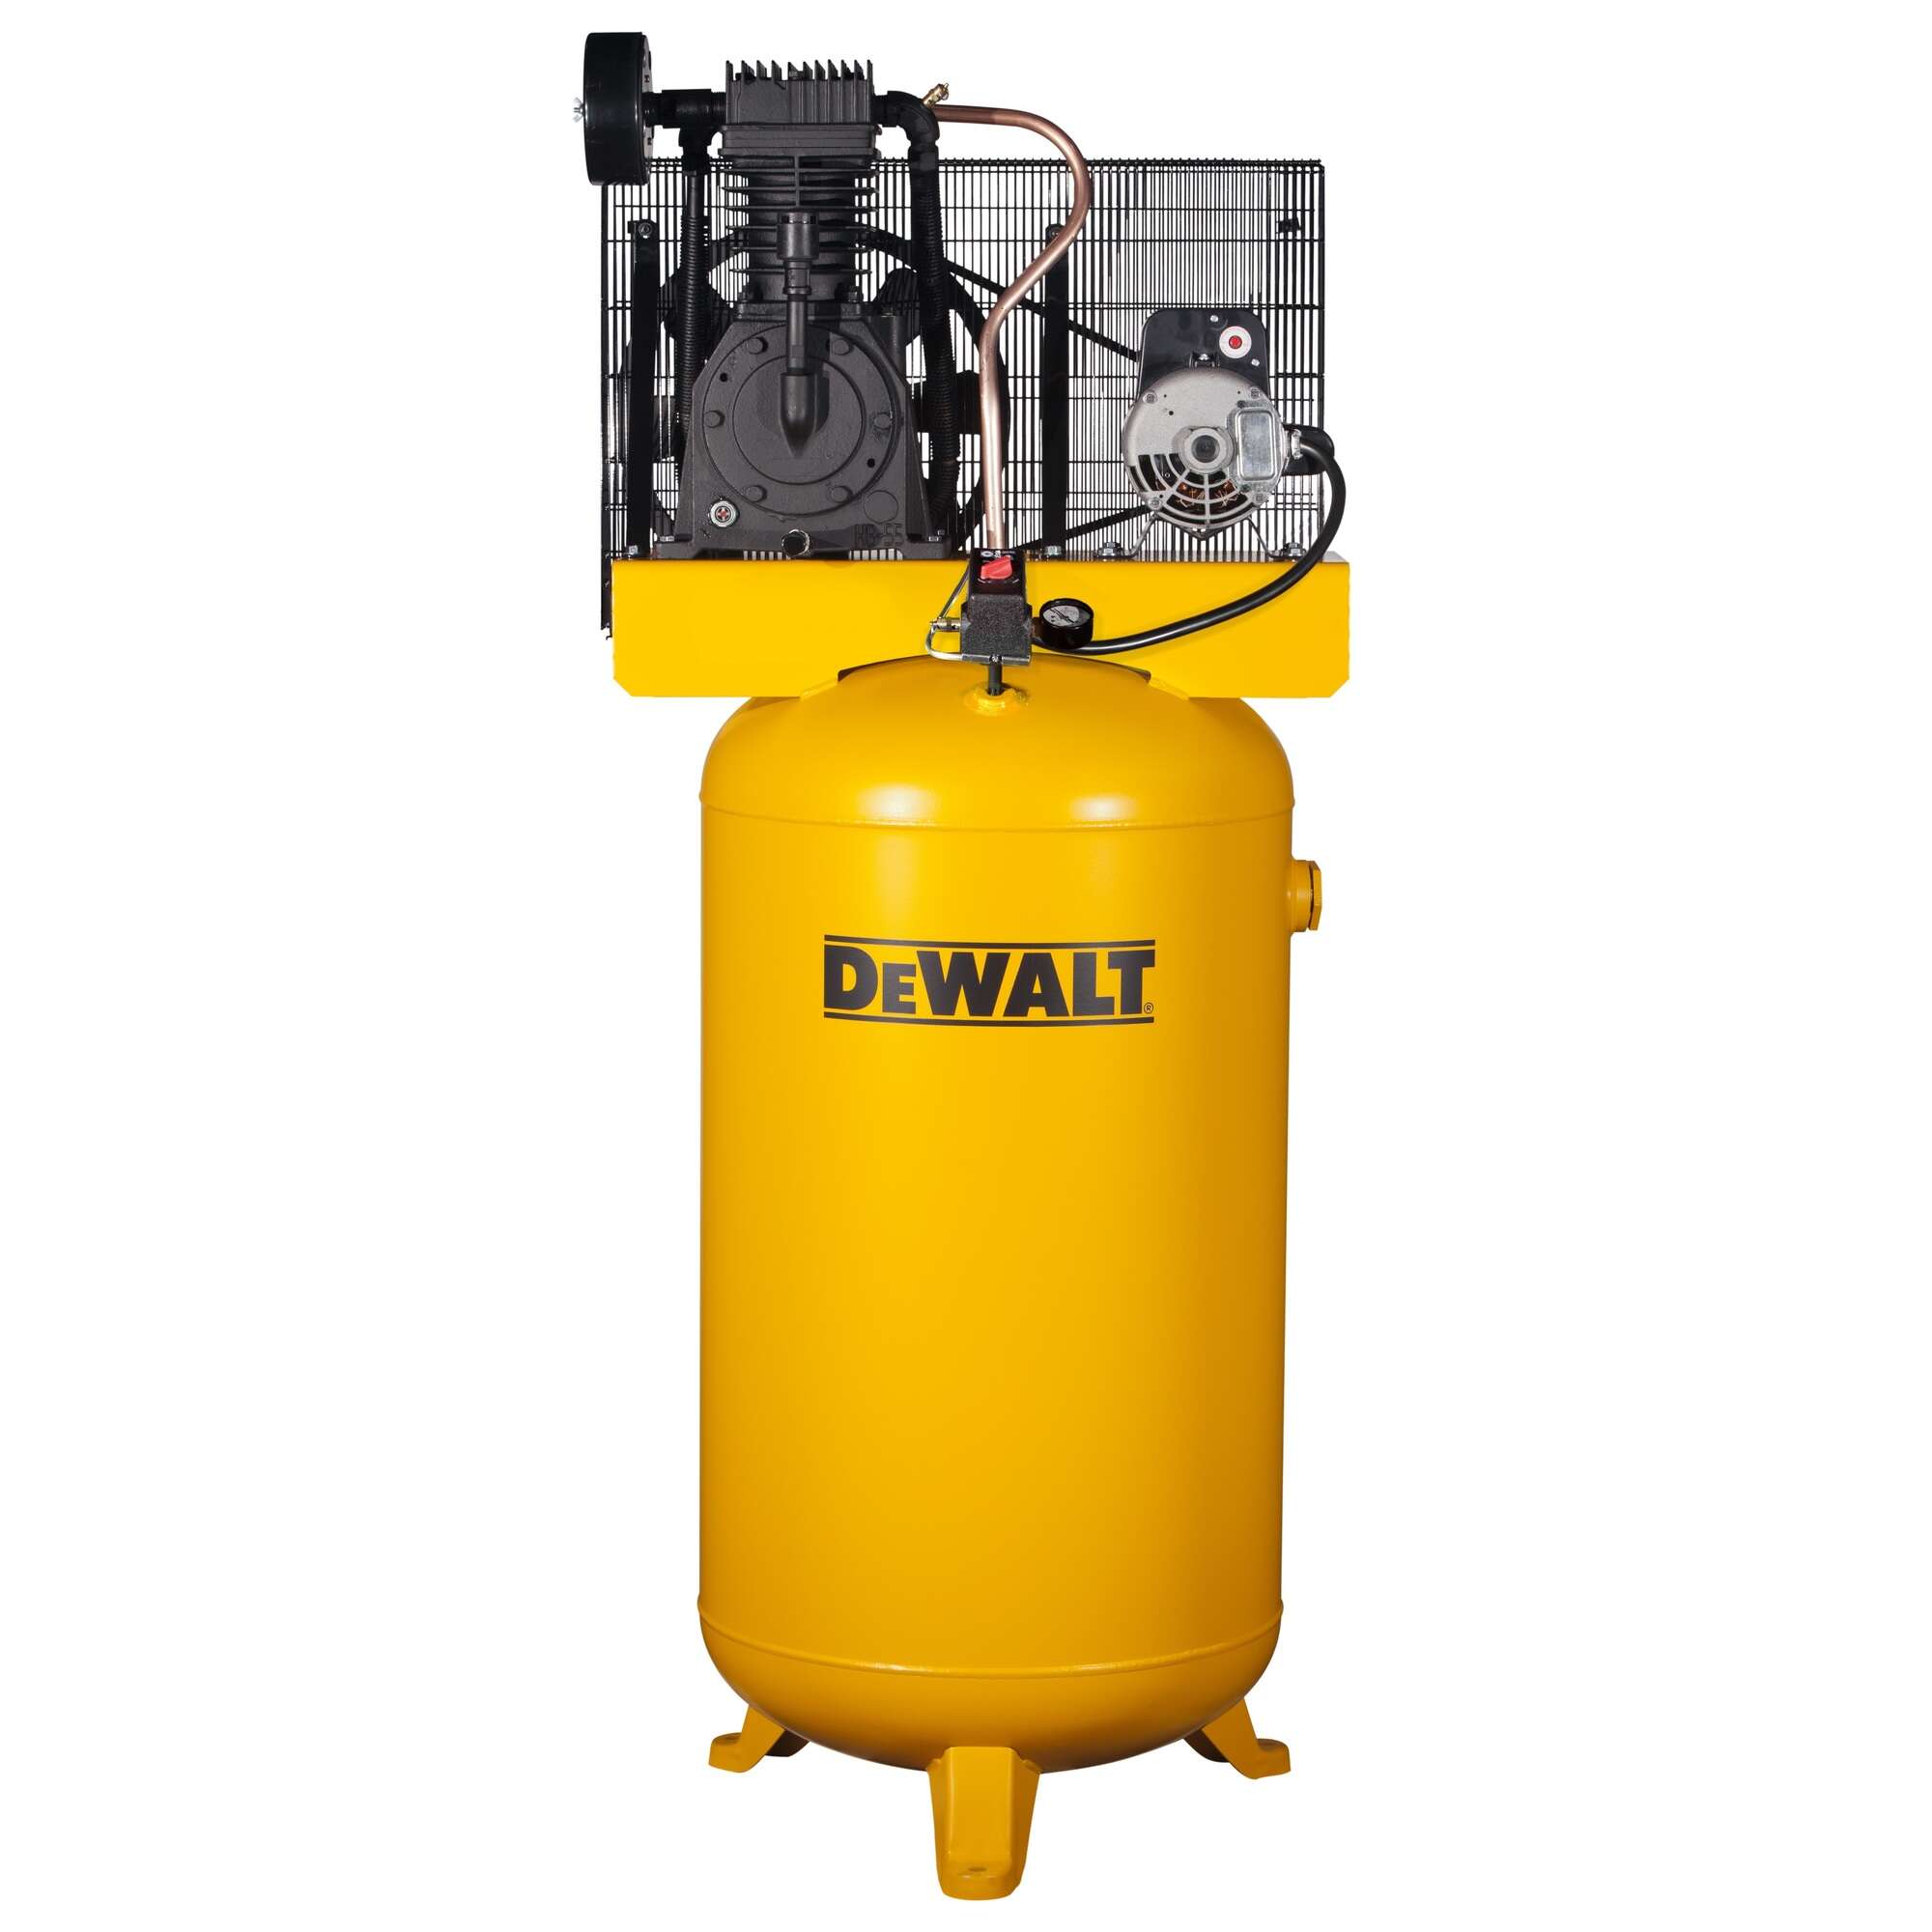 DEWALT Air Compressor 80 Gallon Vertical Two Stage 5 HP